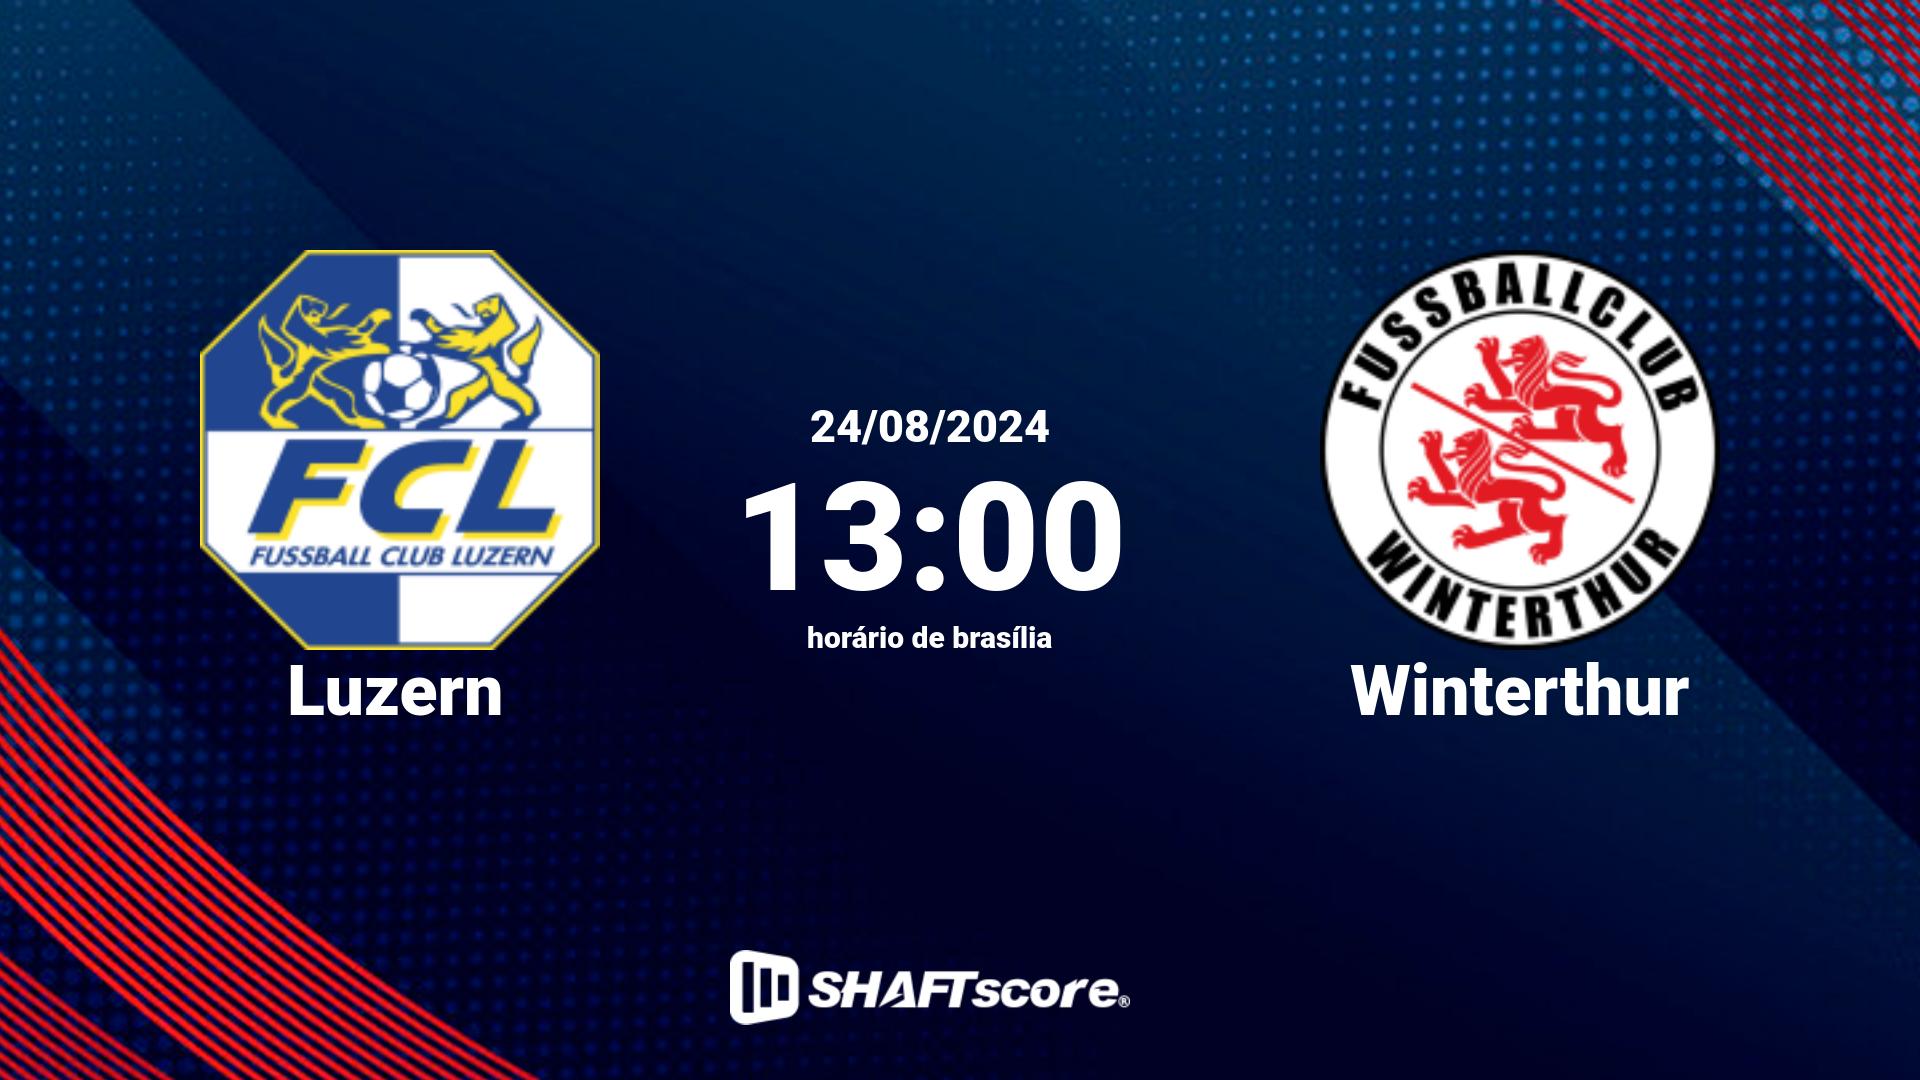 Estatísticas do jogo Luzern vs Winterthur 24.08 13:00